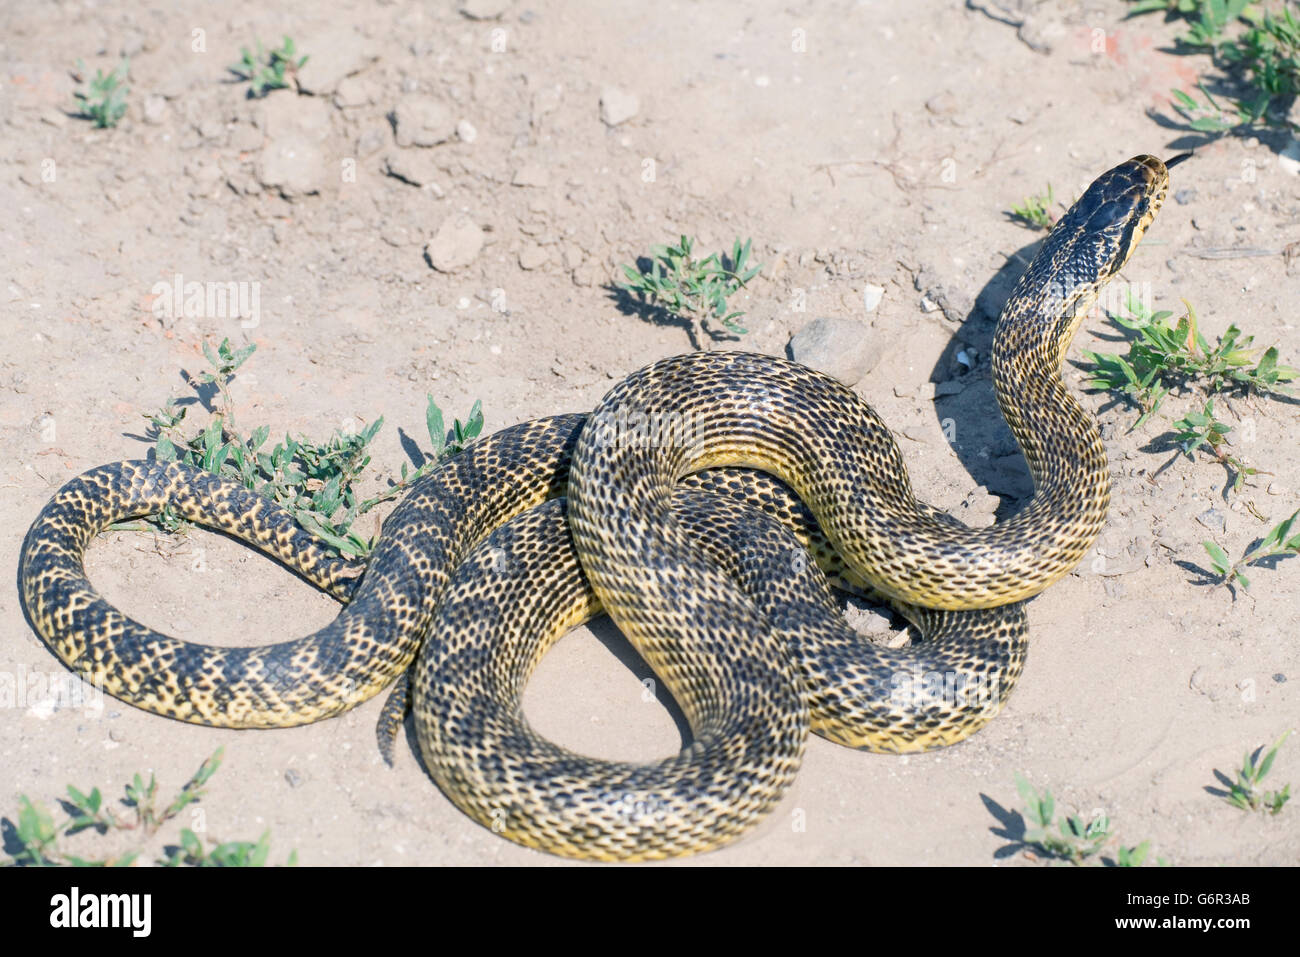 Four-lined Snake, Bulgaria / (Elaphe quatuorlineata) / Four-lined Ratsnake Stock Photo